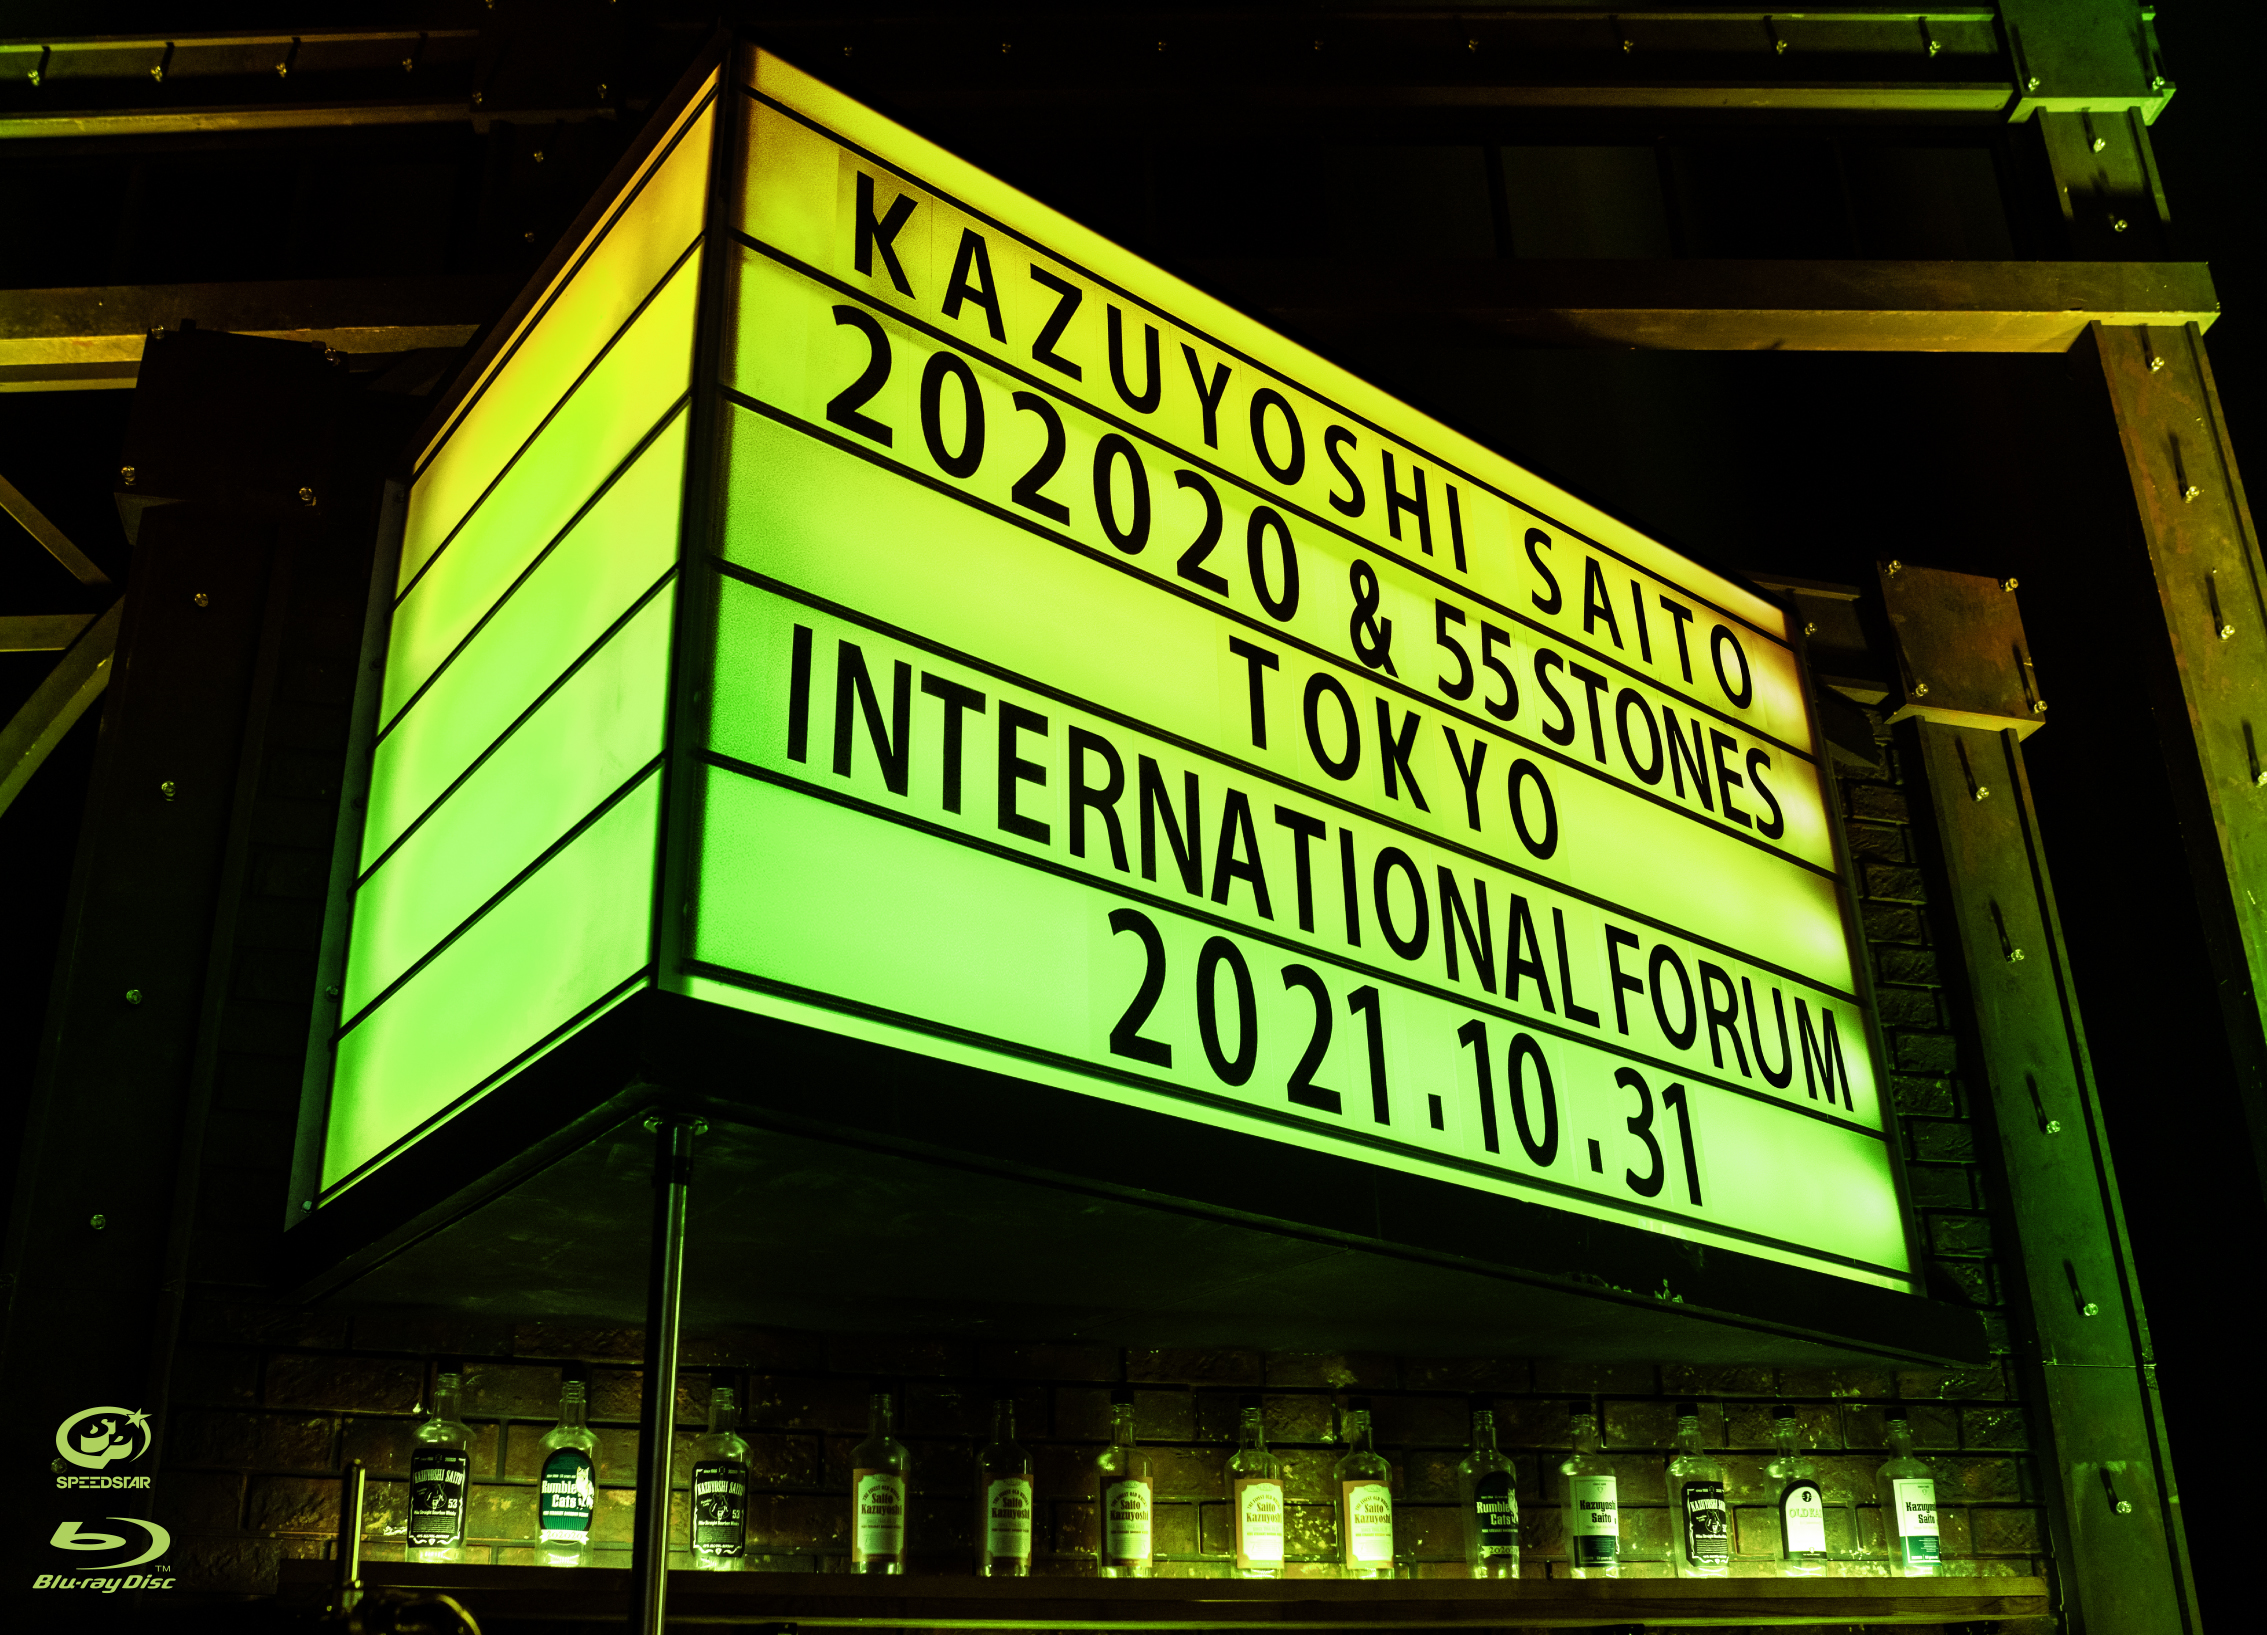 LIVE Blu-ray&DVD/CD 『KAZUYOSHI SAITO LIVE TOUR 2021 “202020 & 55 STONES”』